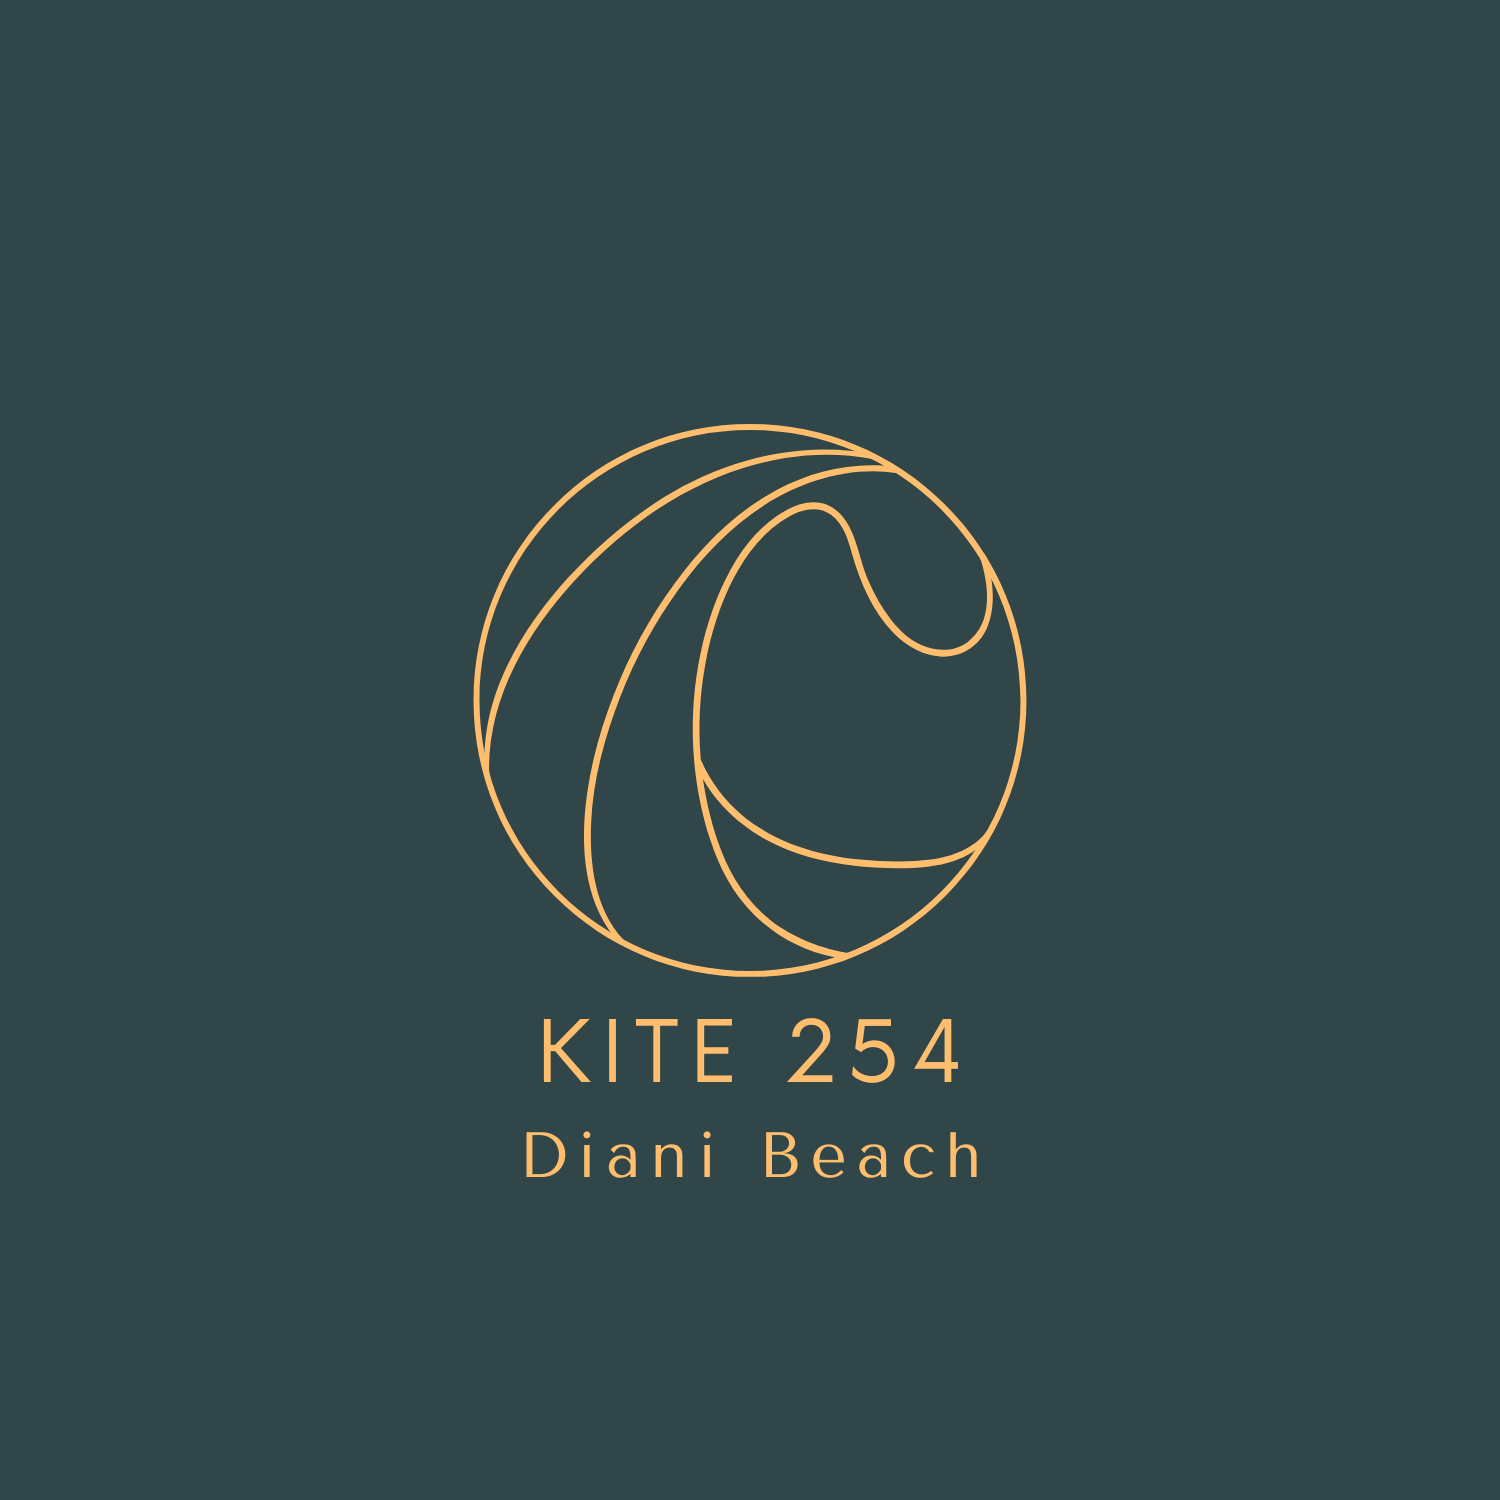 Kite 254